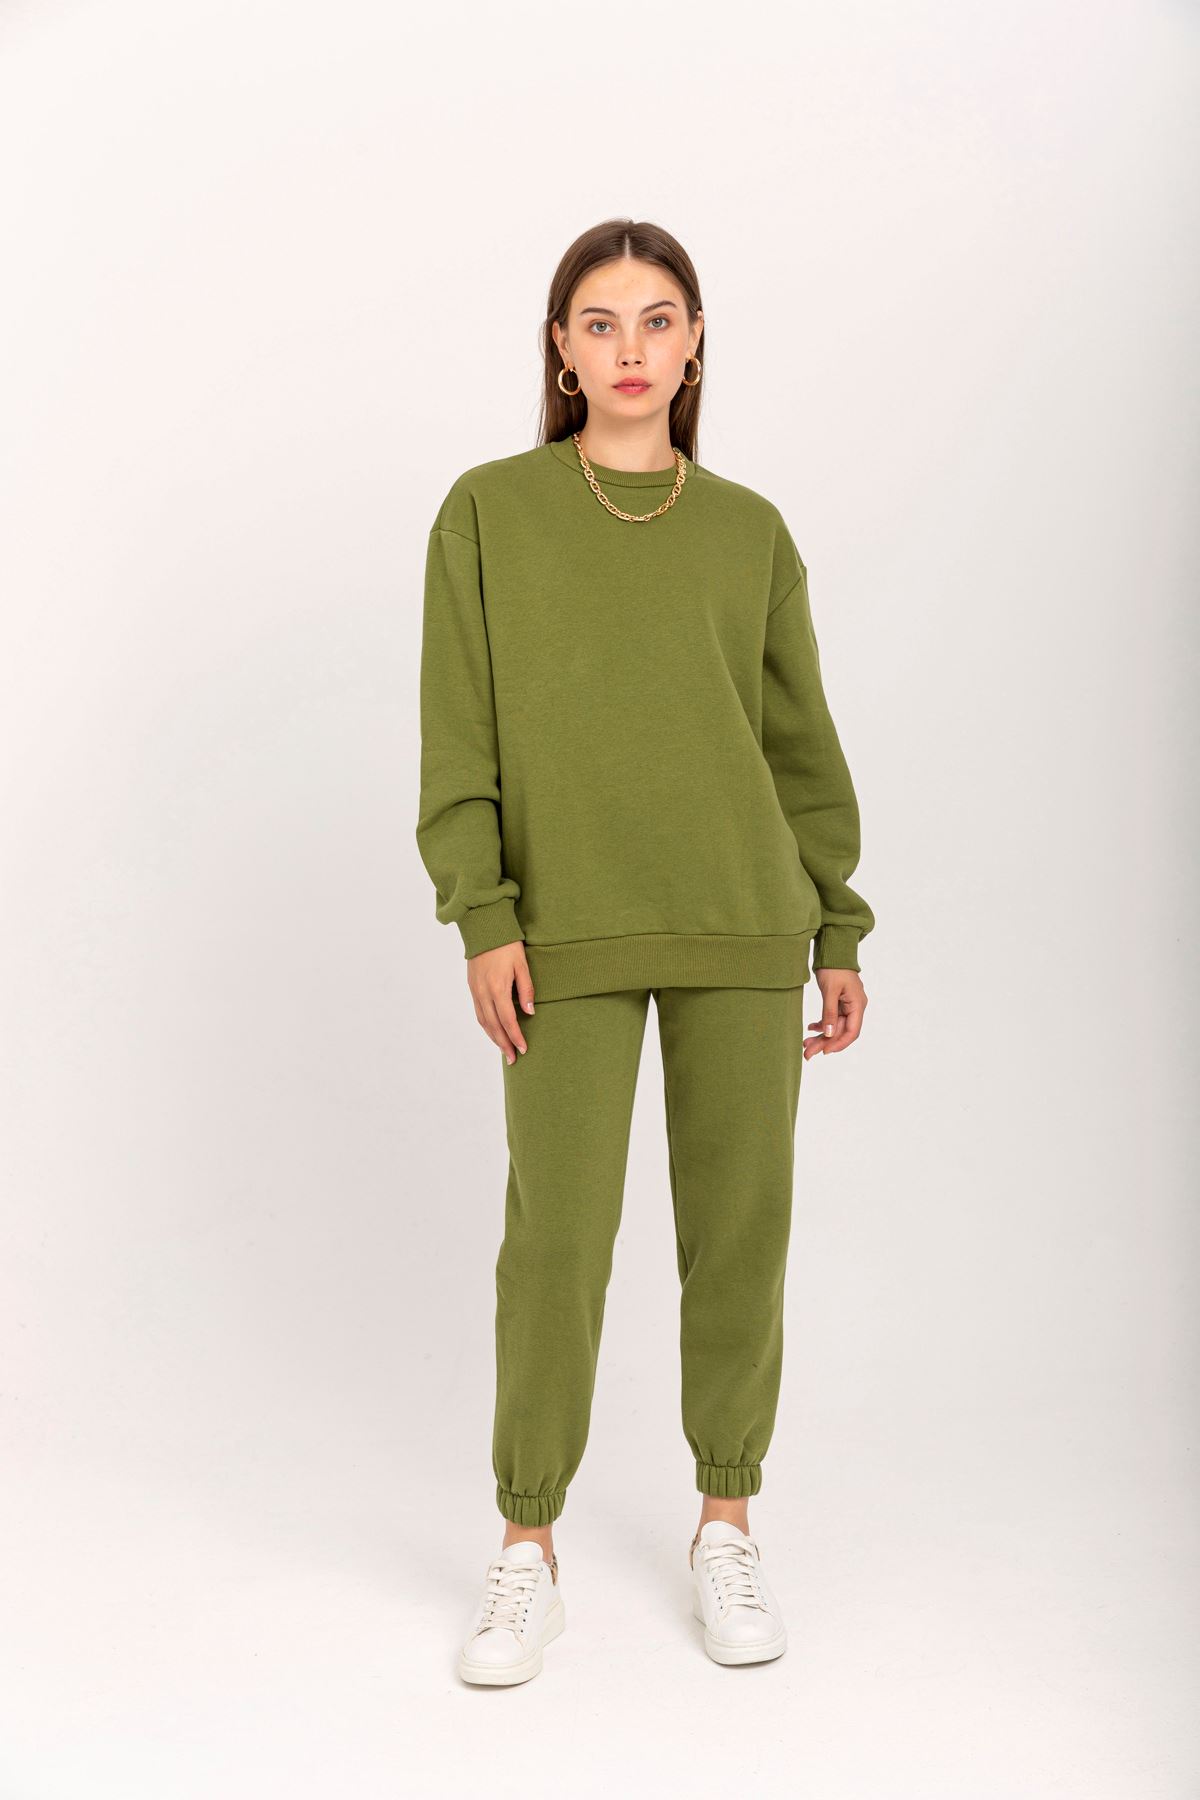 Third Knit With Wool İnside Fabric Long Sleeve Below Hip Women Sweatshirt - Khaki 